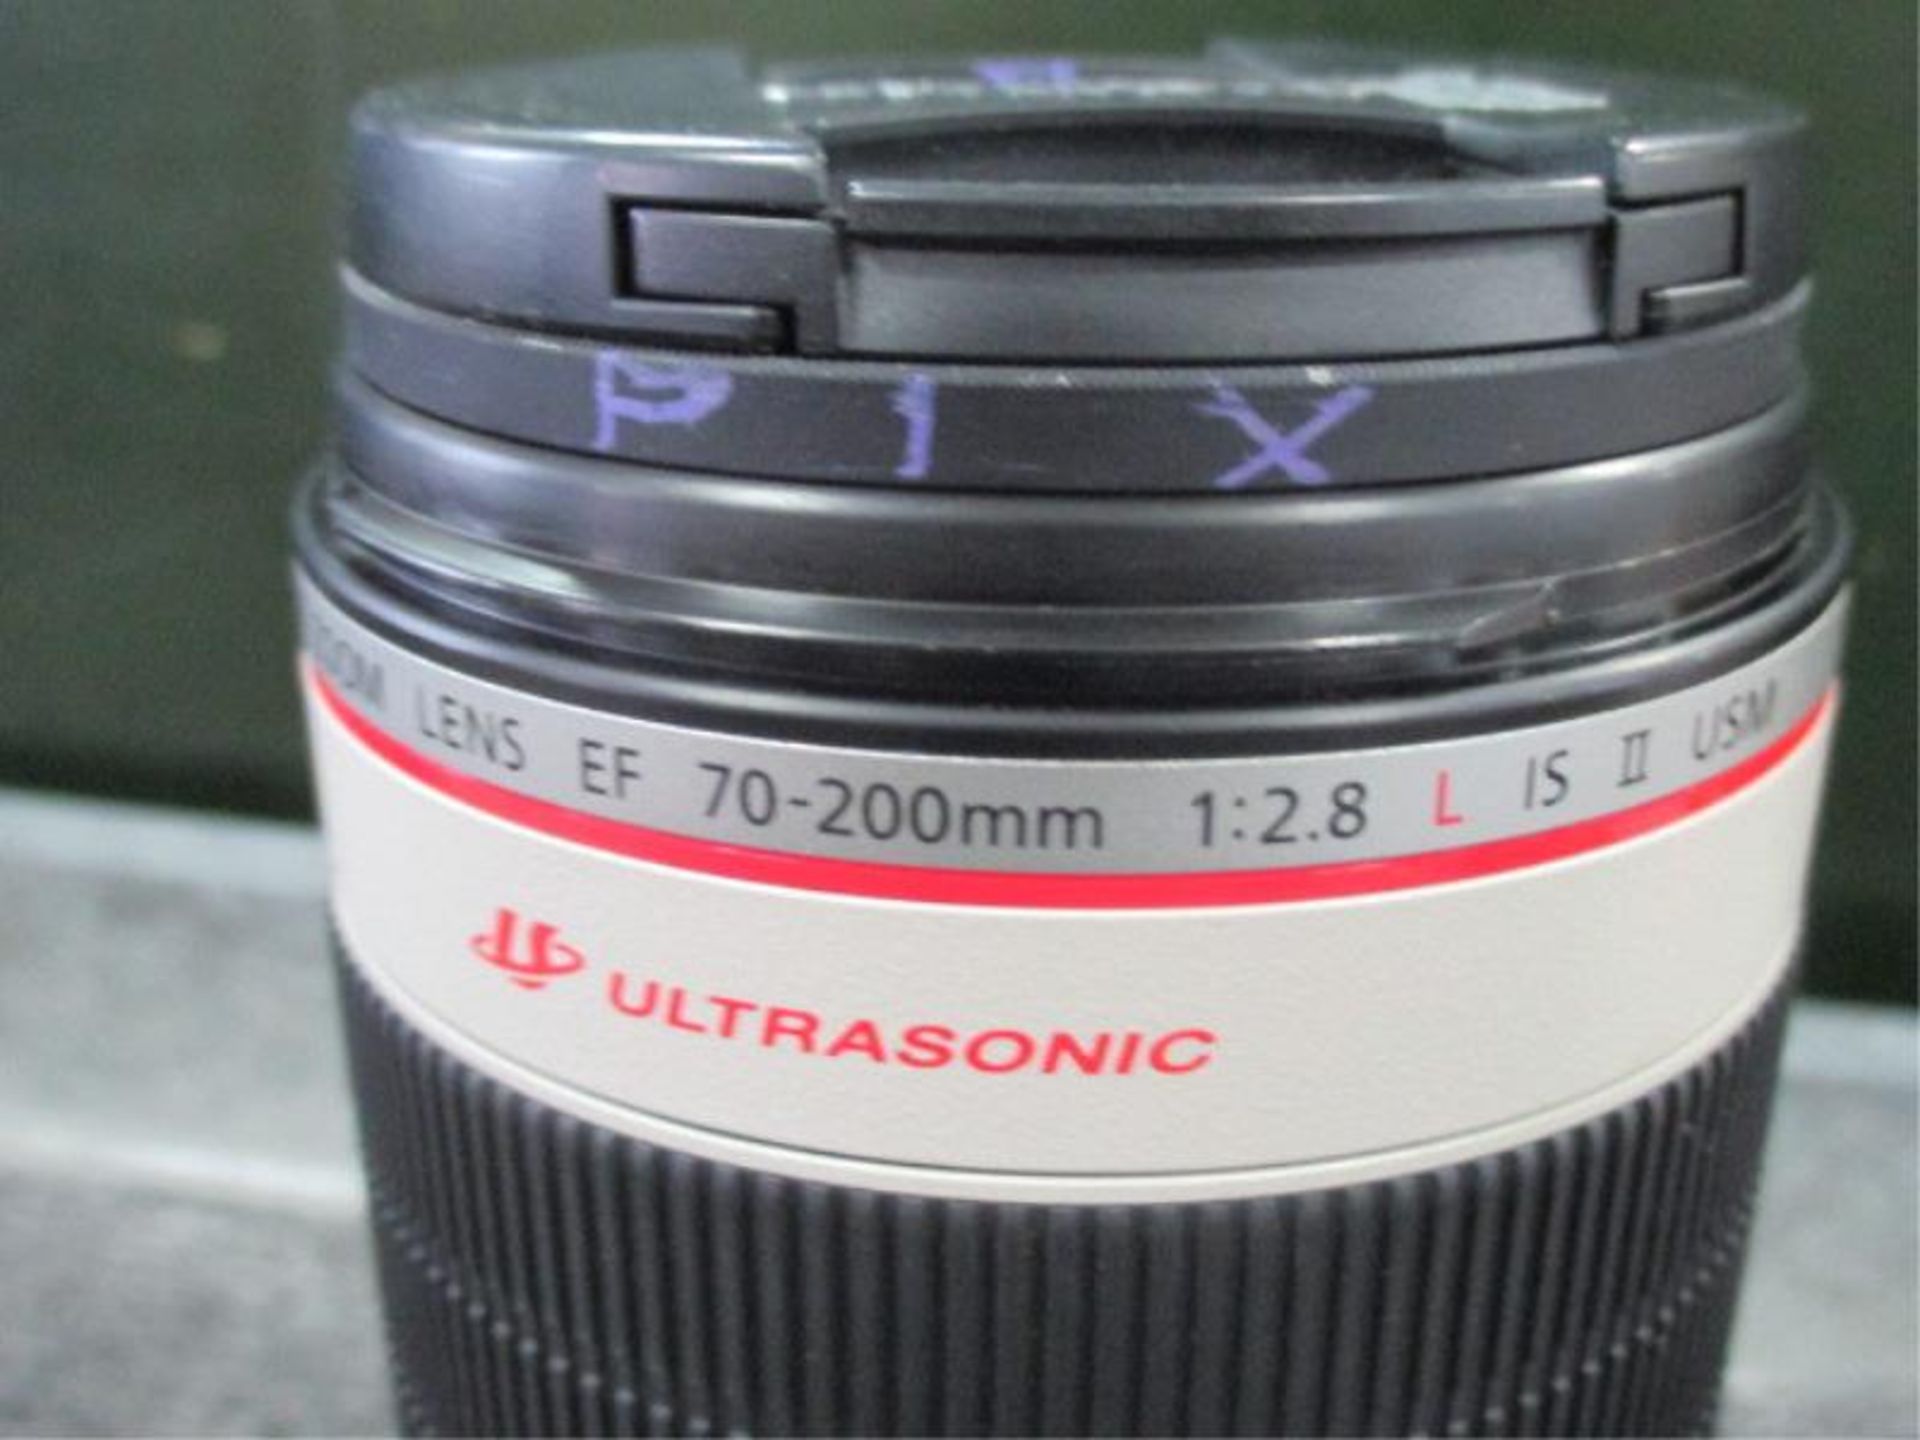 Canon EF 70-200 f/.2.8L IS USM Zoom Lens - Image 3 of 3